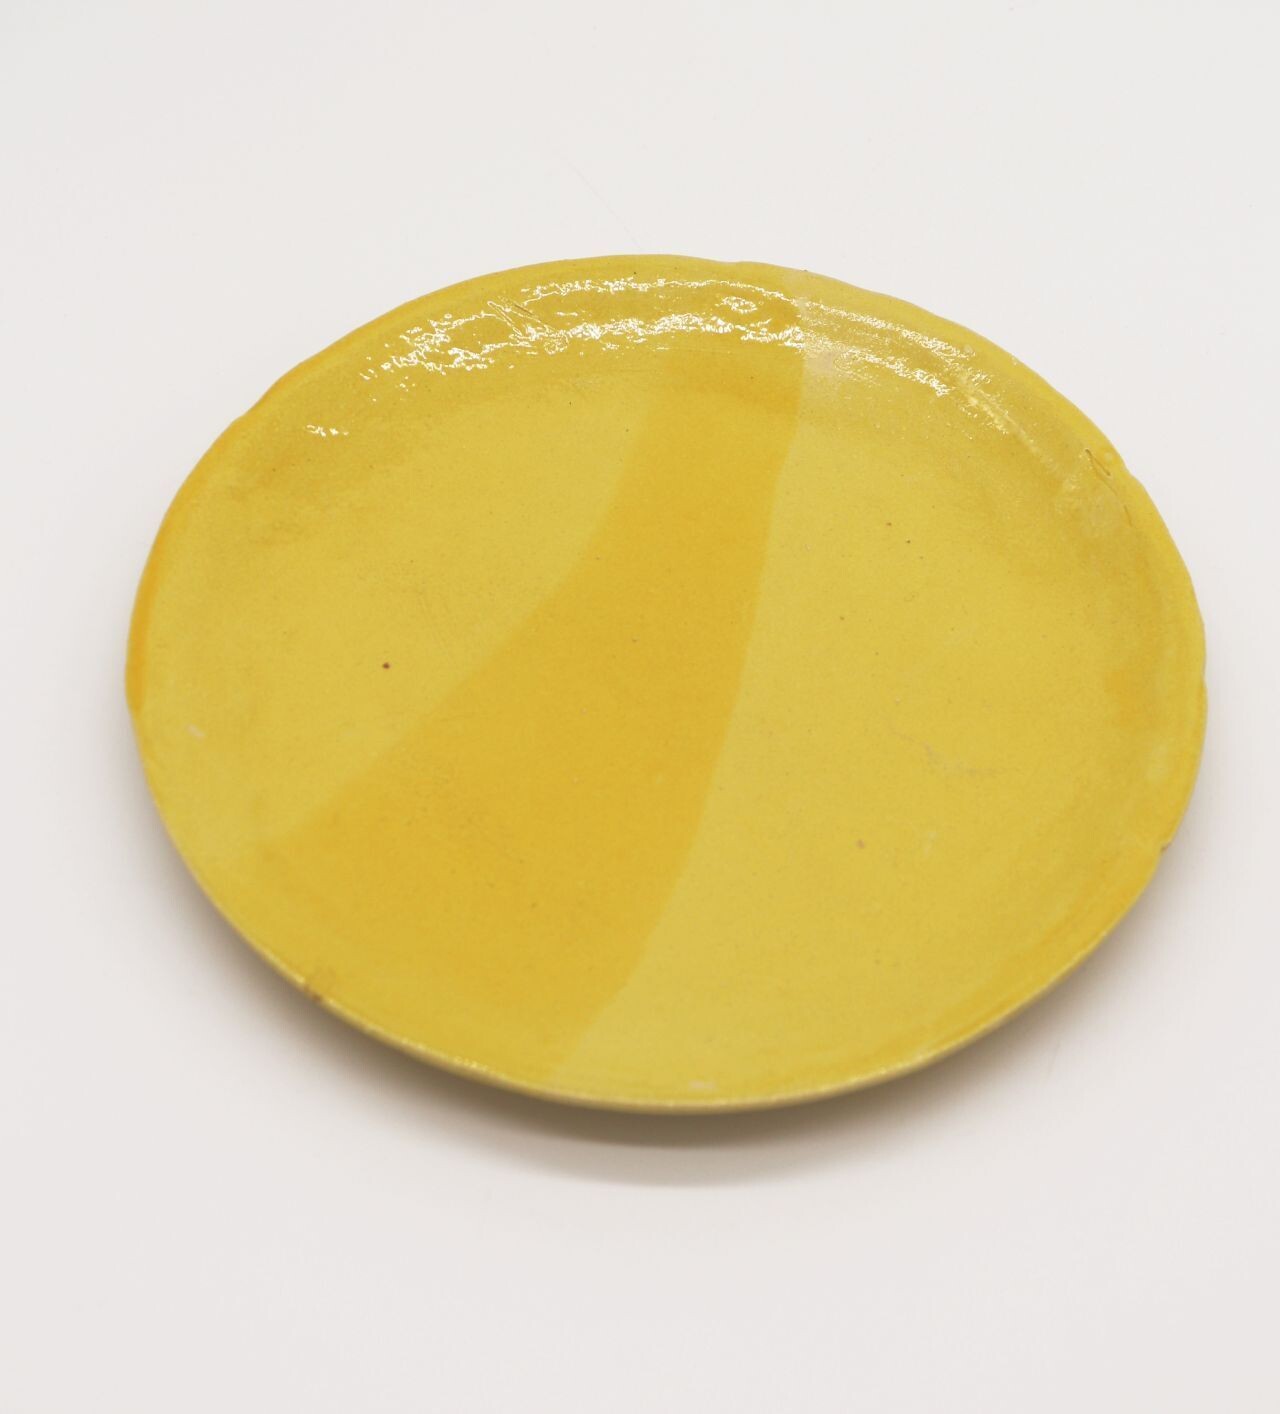 Teller Keramik Geschirr, Essteller, Kuchenteller gelb